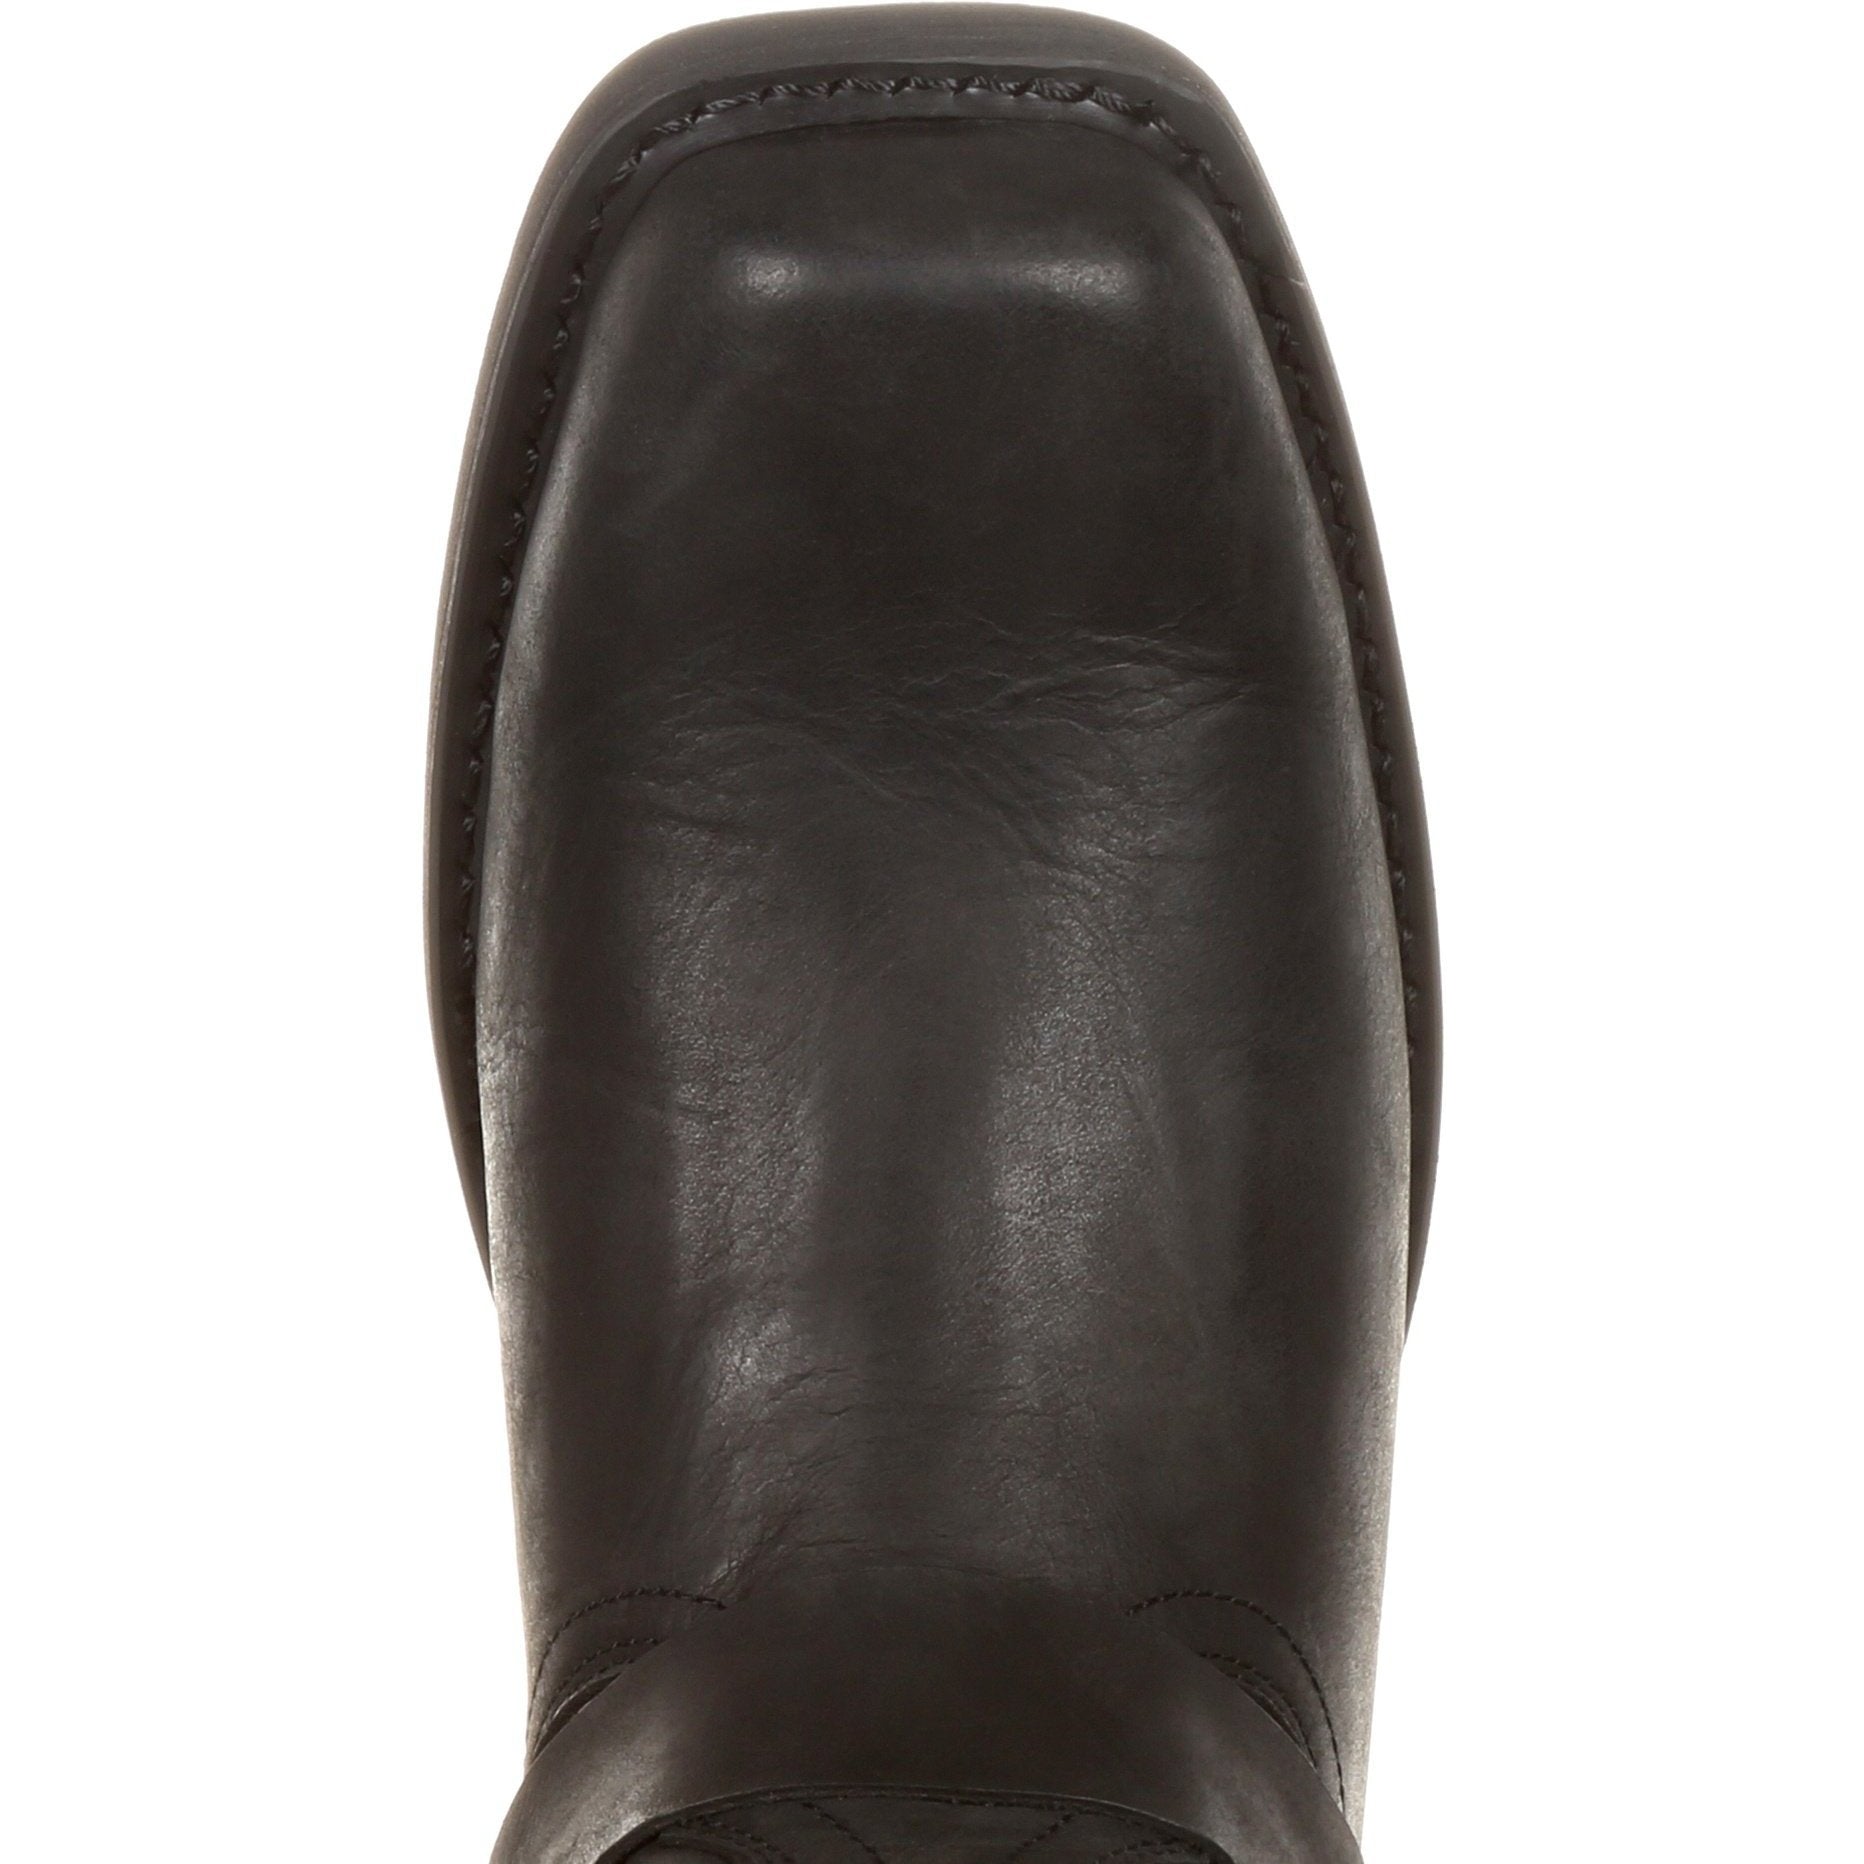 Durango Men's Black Faded 11" Snoot toe Flag Harness Boot Black DDB0141  - Overlook Boots